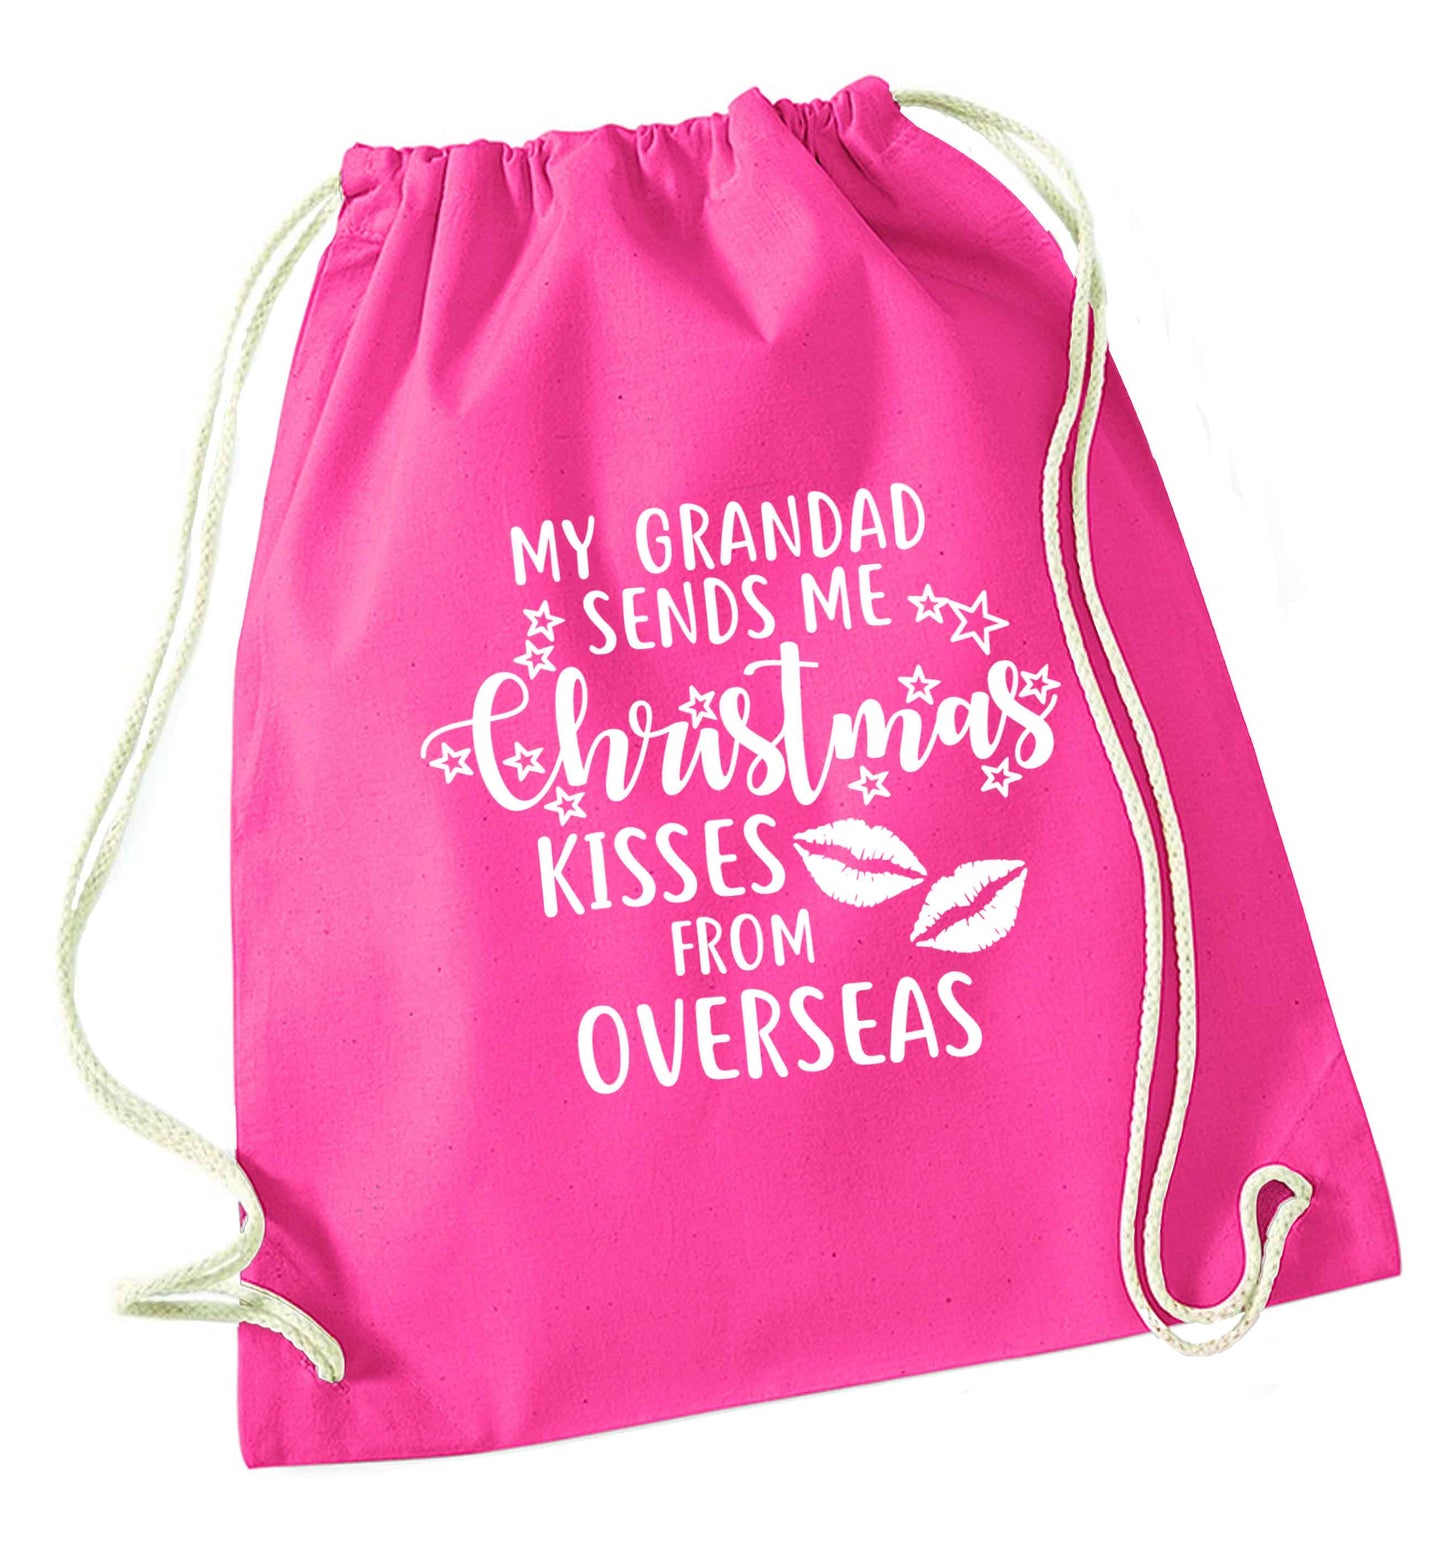 Grandad Christmas Kisses Overseas pink drawstring bag